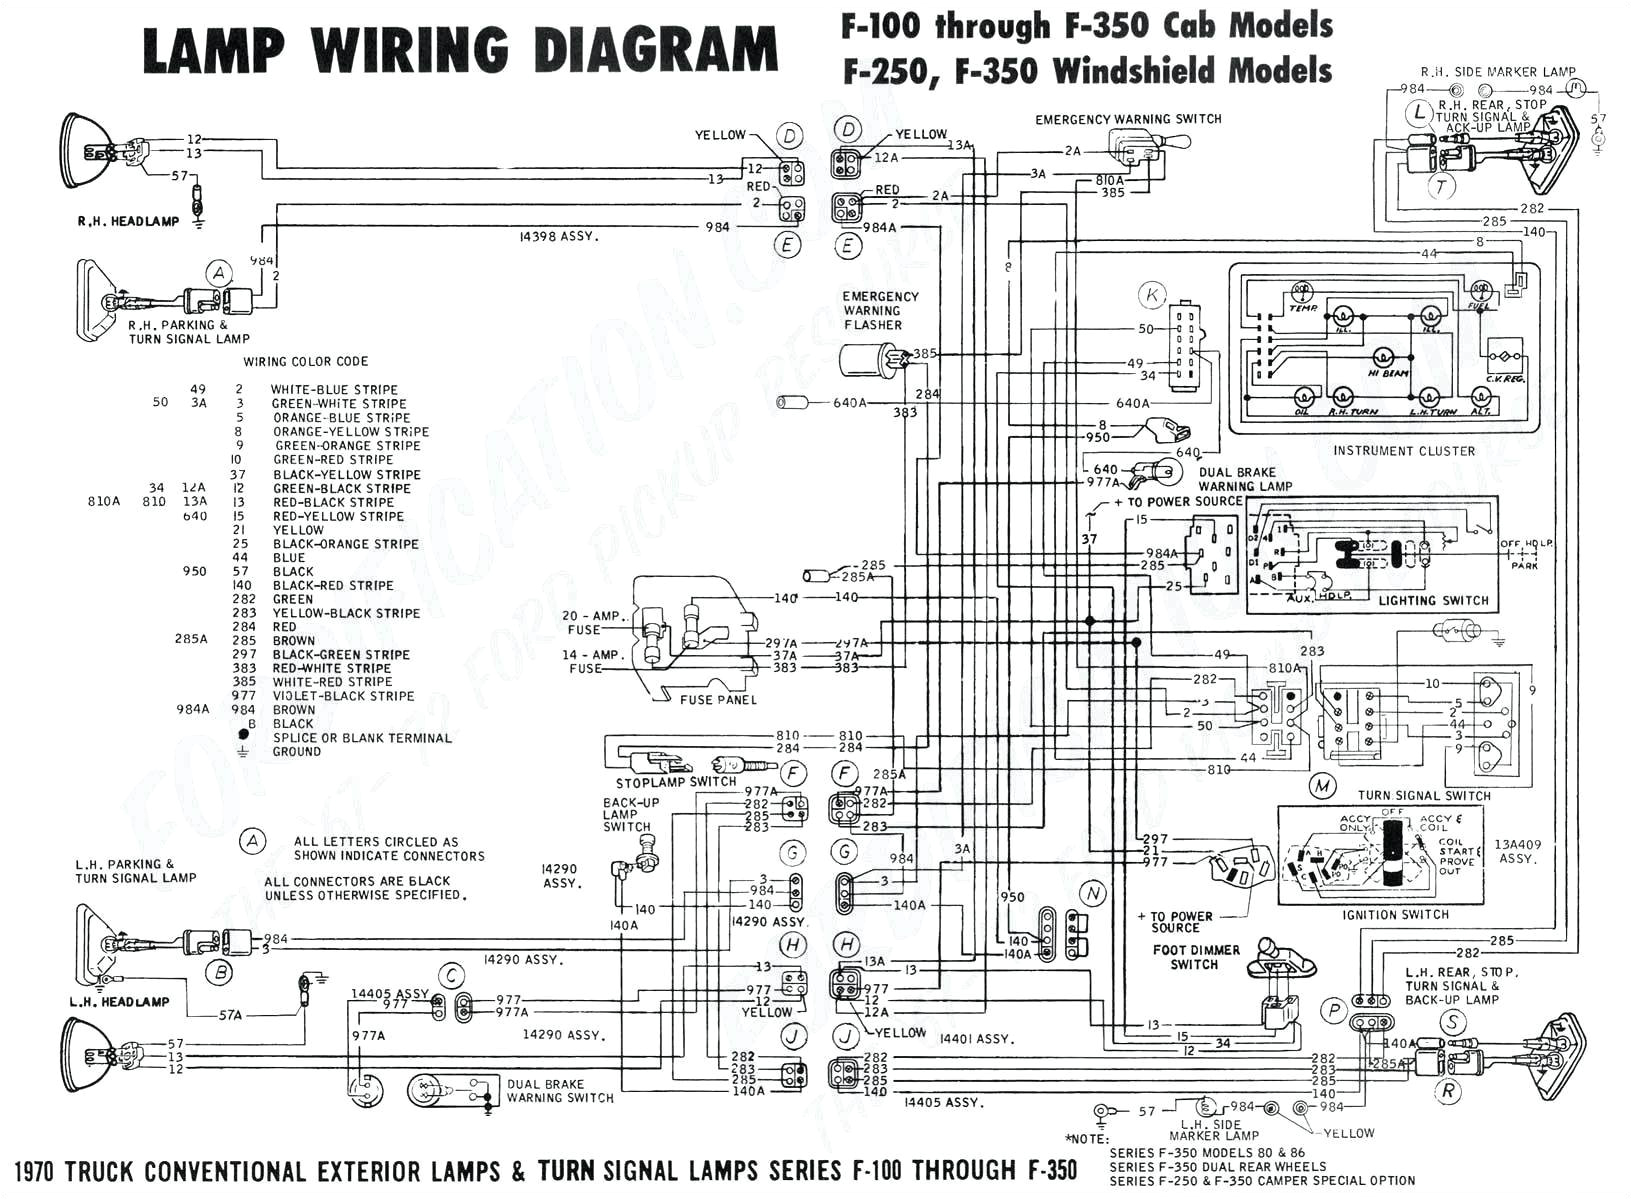 john deere wiring diagram awesome john deere x320 wiring diagram list john deere x320 wiring